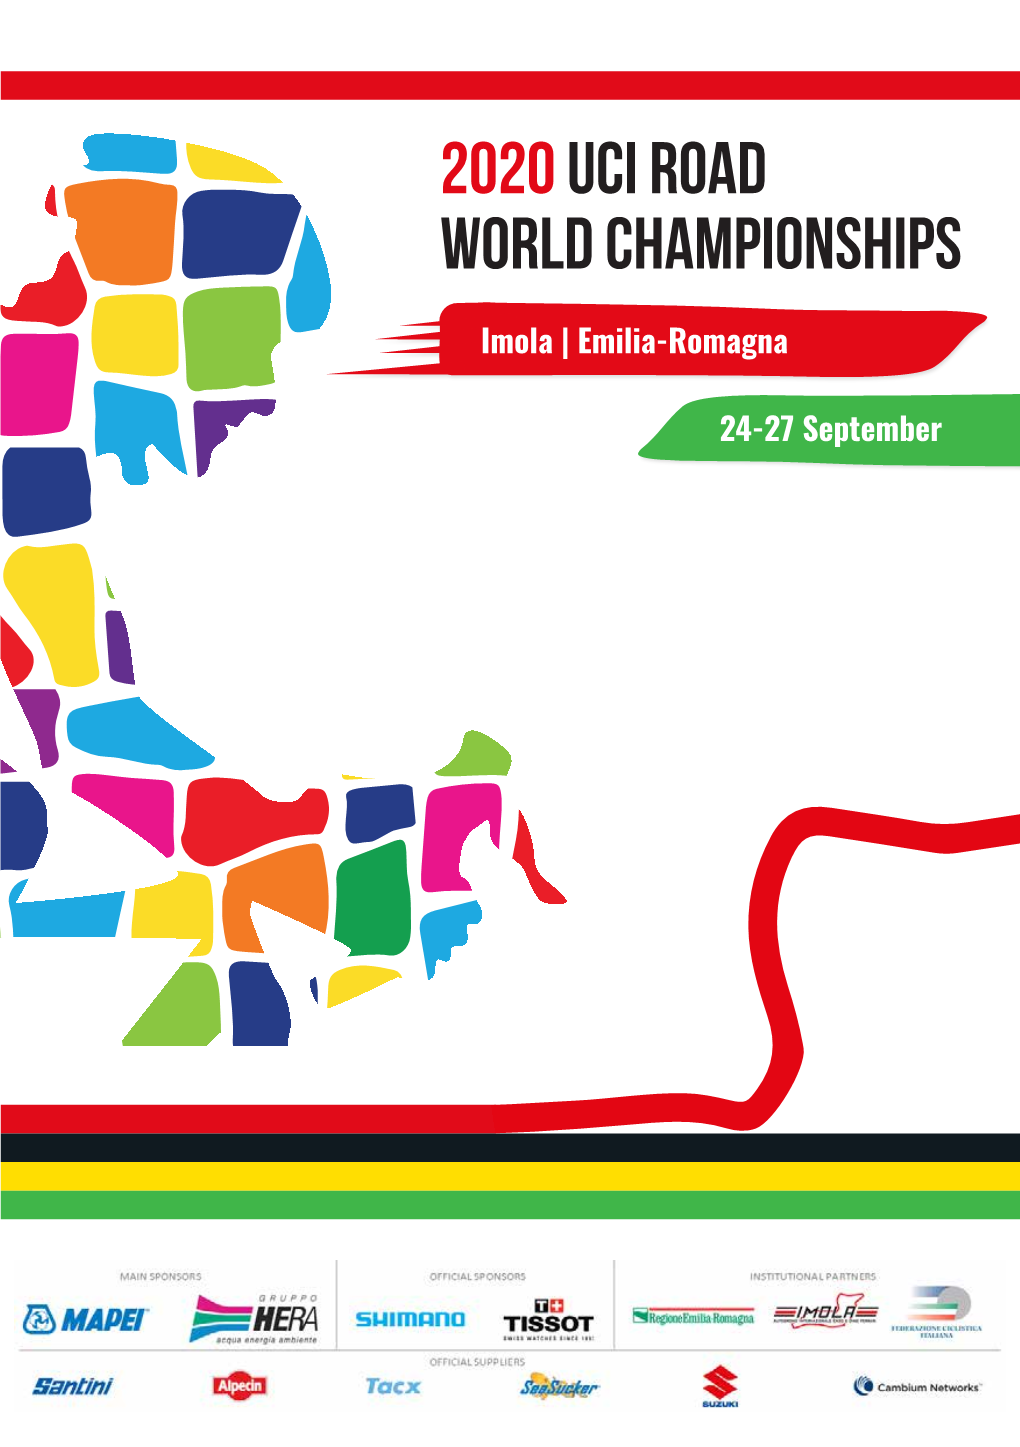 2020 Uci Road World Championships